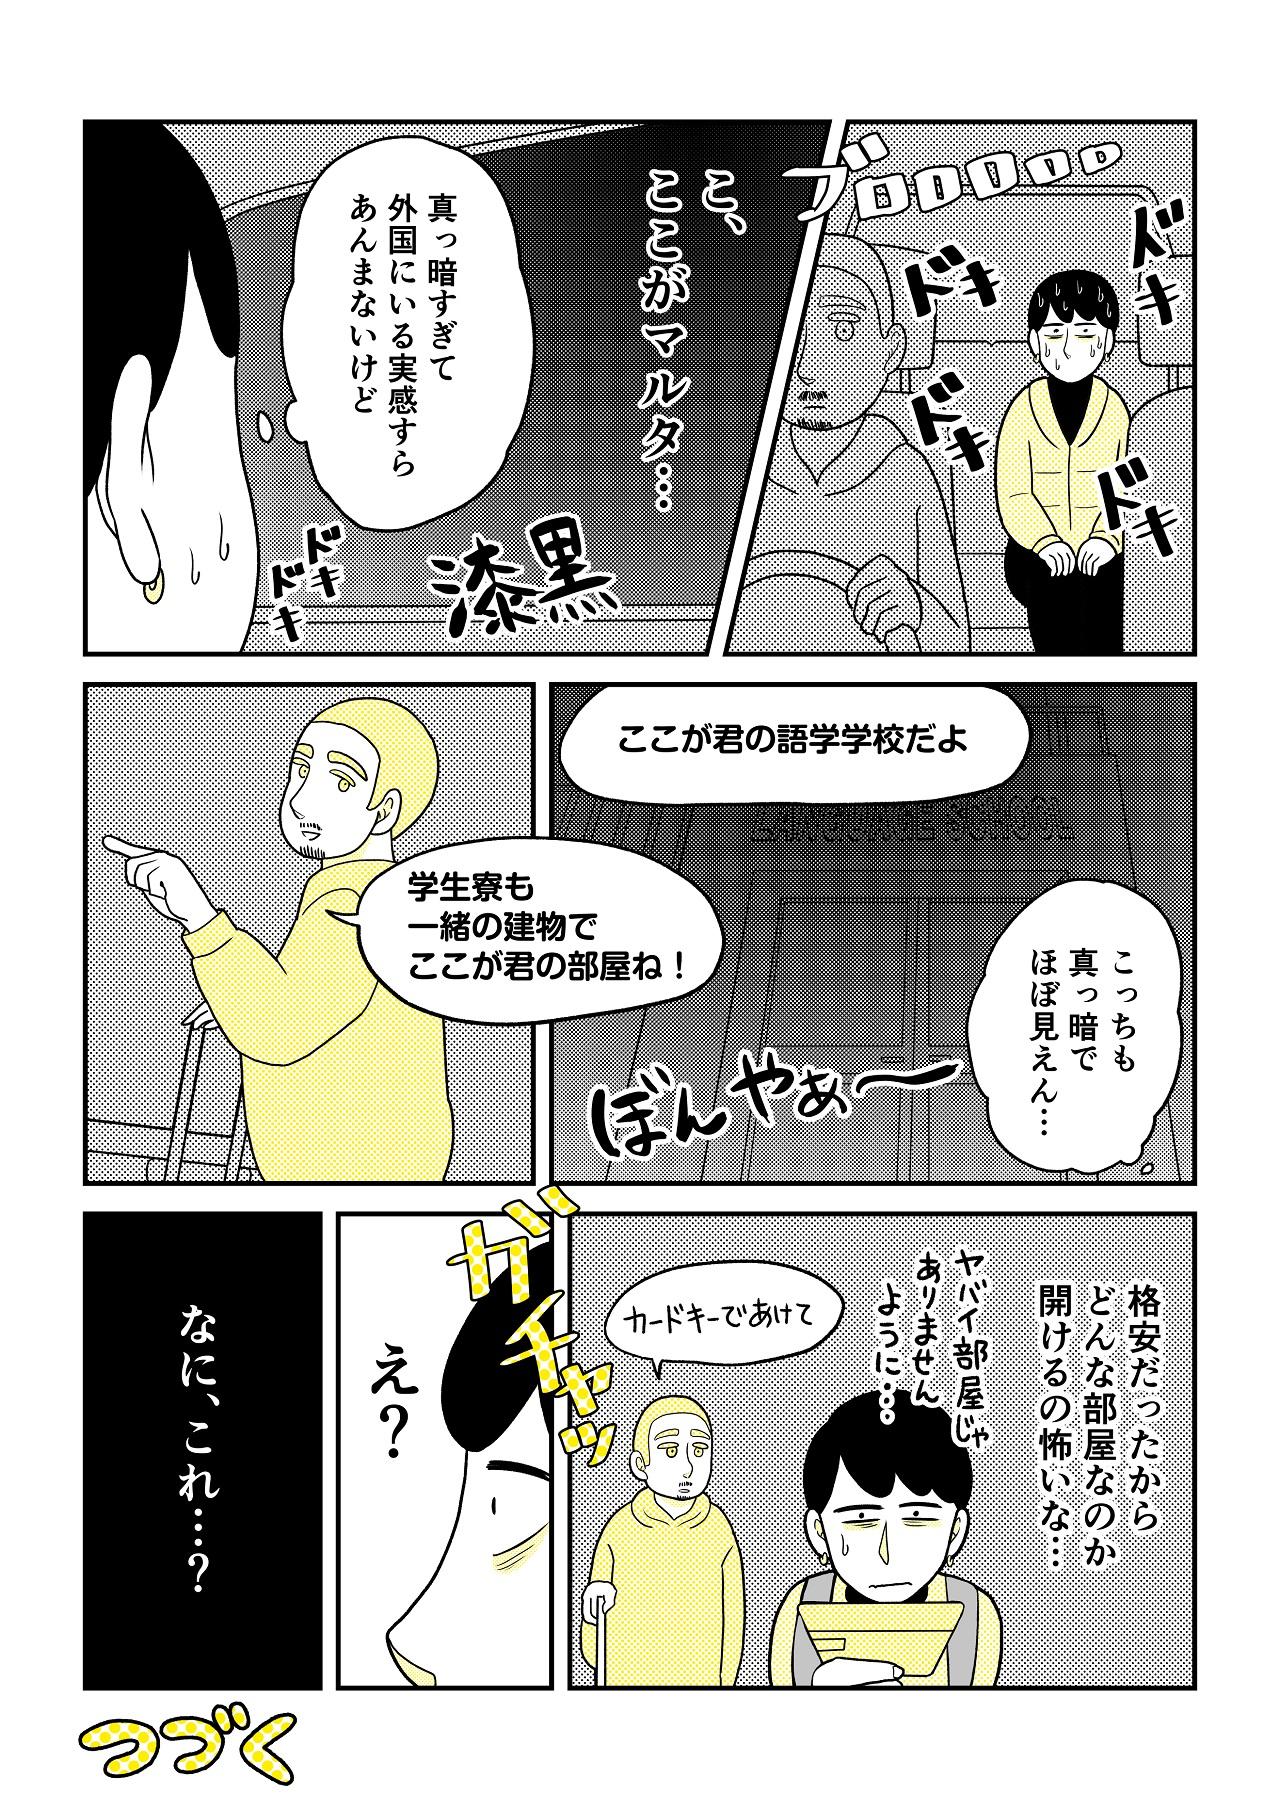 https://www.ryugaku.co.jp/column/images/05_06_1280.jpg